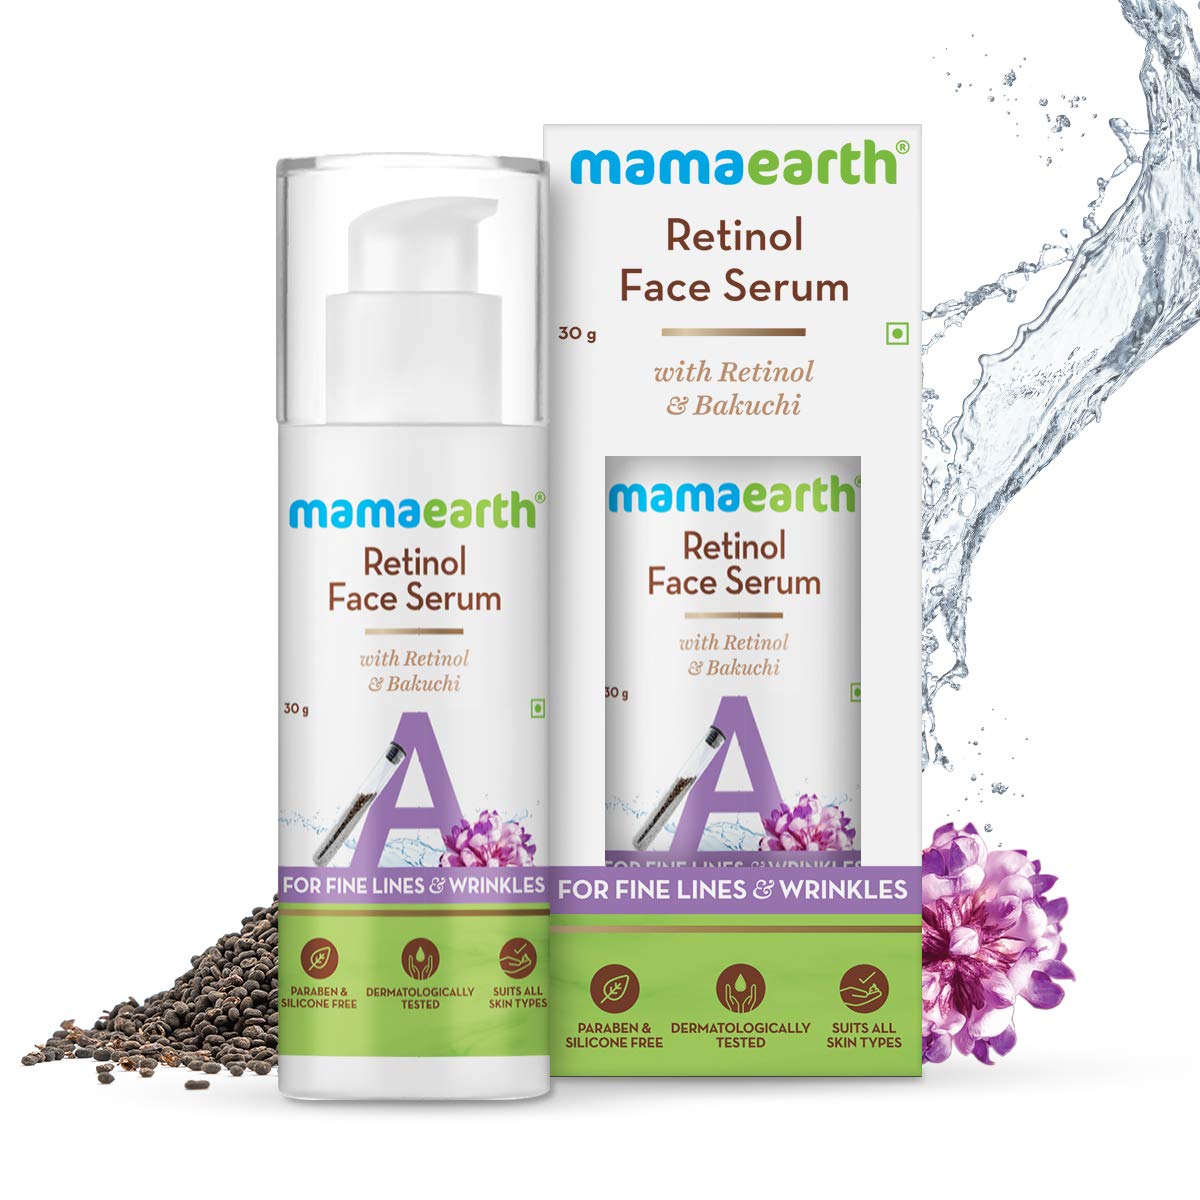 mamaearth-retinol-face-serum